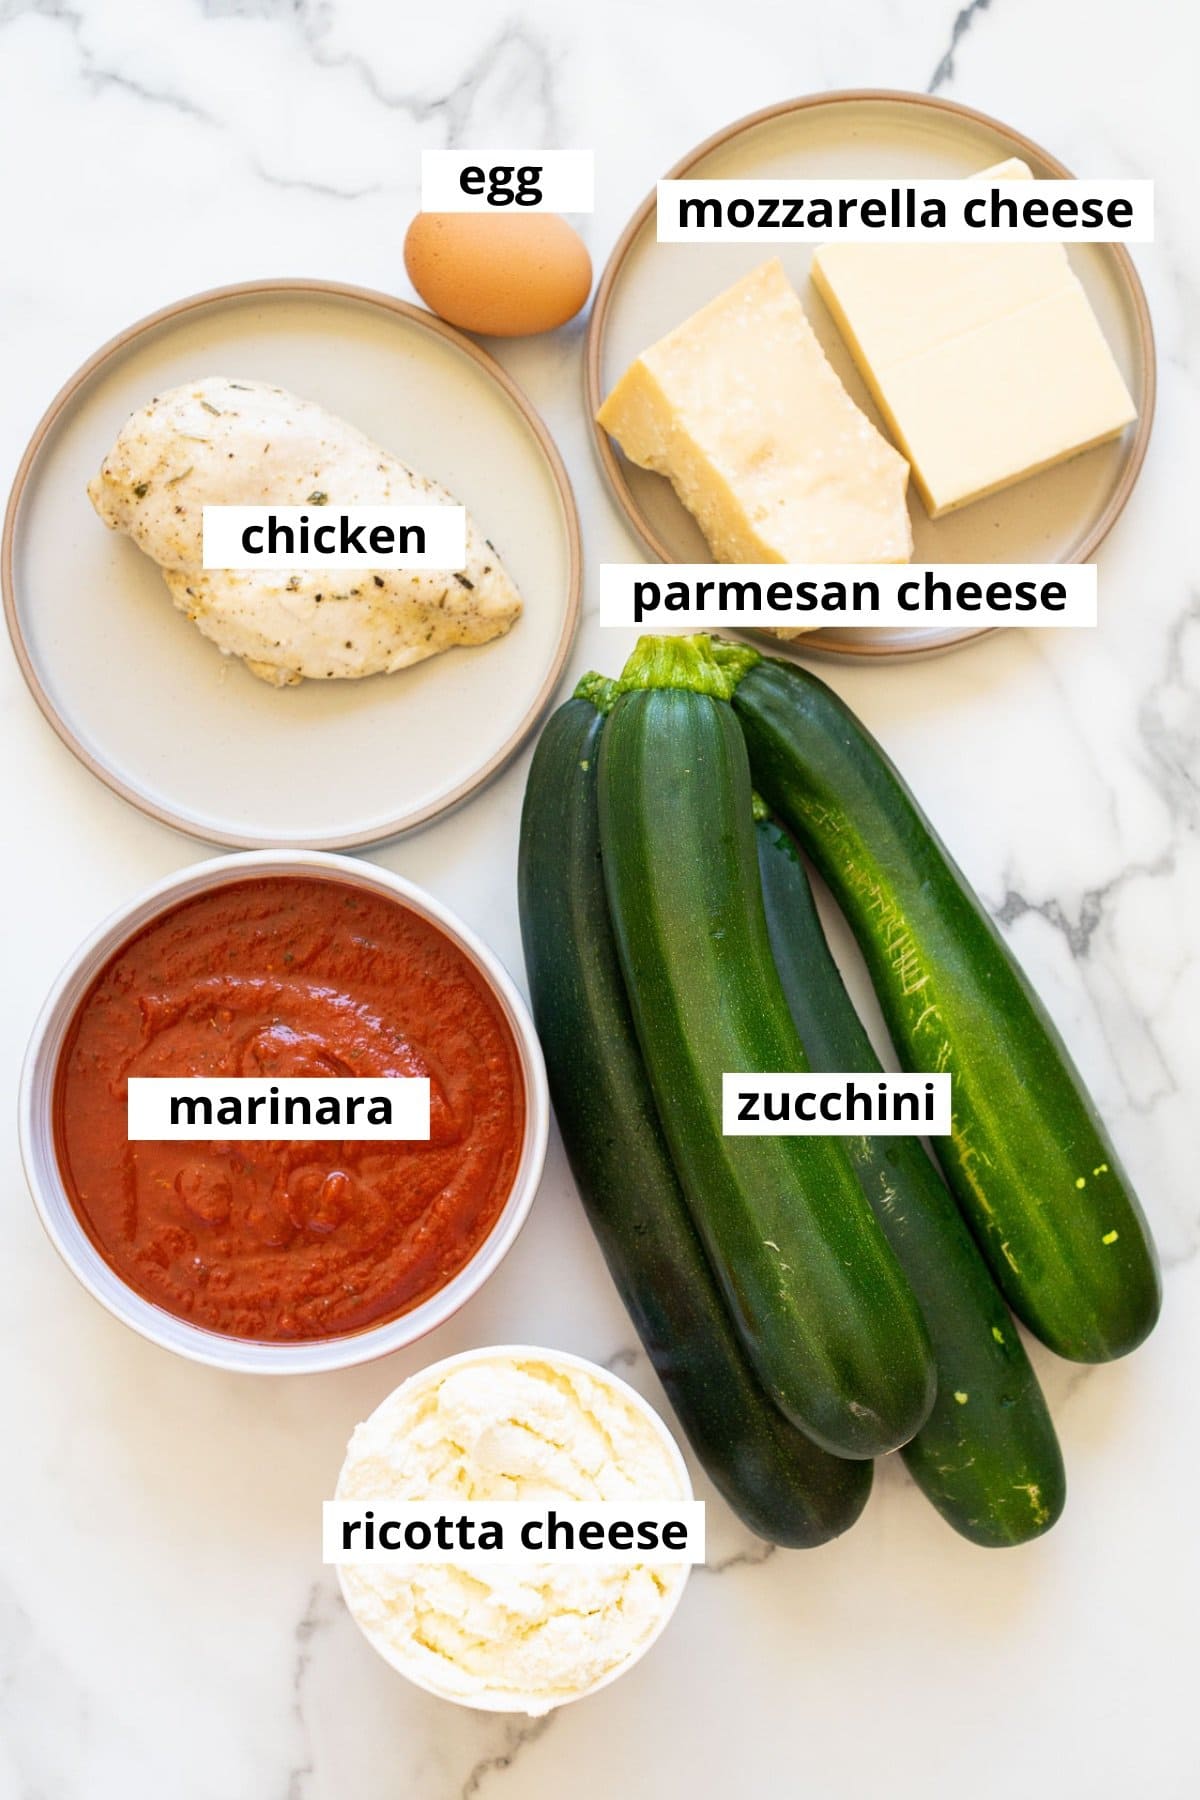 Zucchini, chicken breast, parmesan cheese, mozzarella cheese, egg, marinara sauce, ricotta cheese.